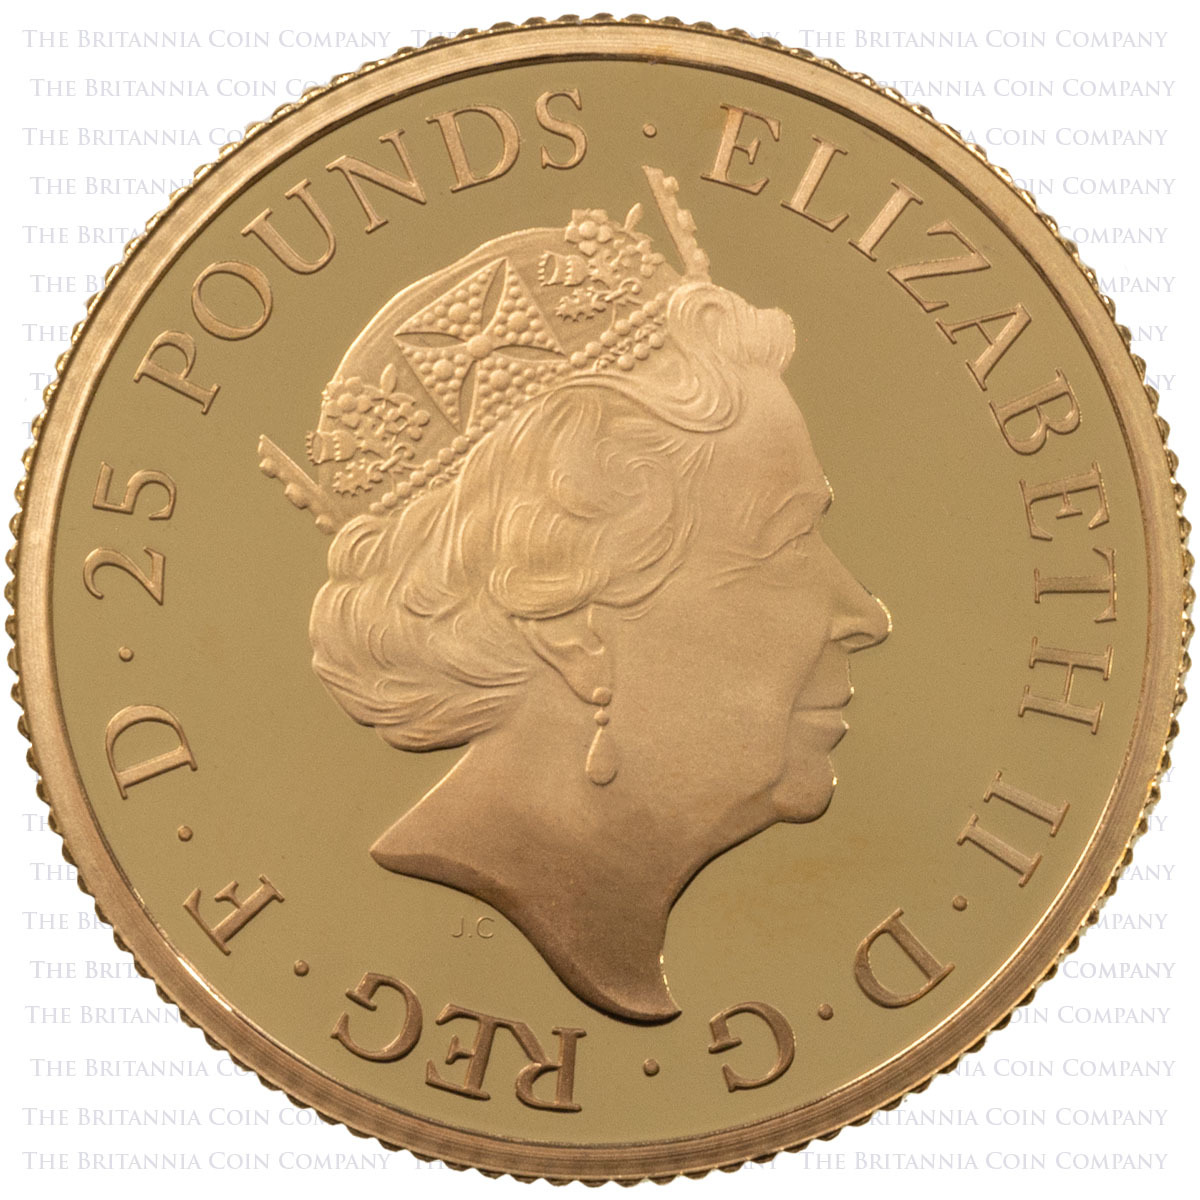 UK17QUQO 2017 Queen's Beasts Unicorn Of Scotland Quarter Ounce Gold Proof Coin Obverse